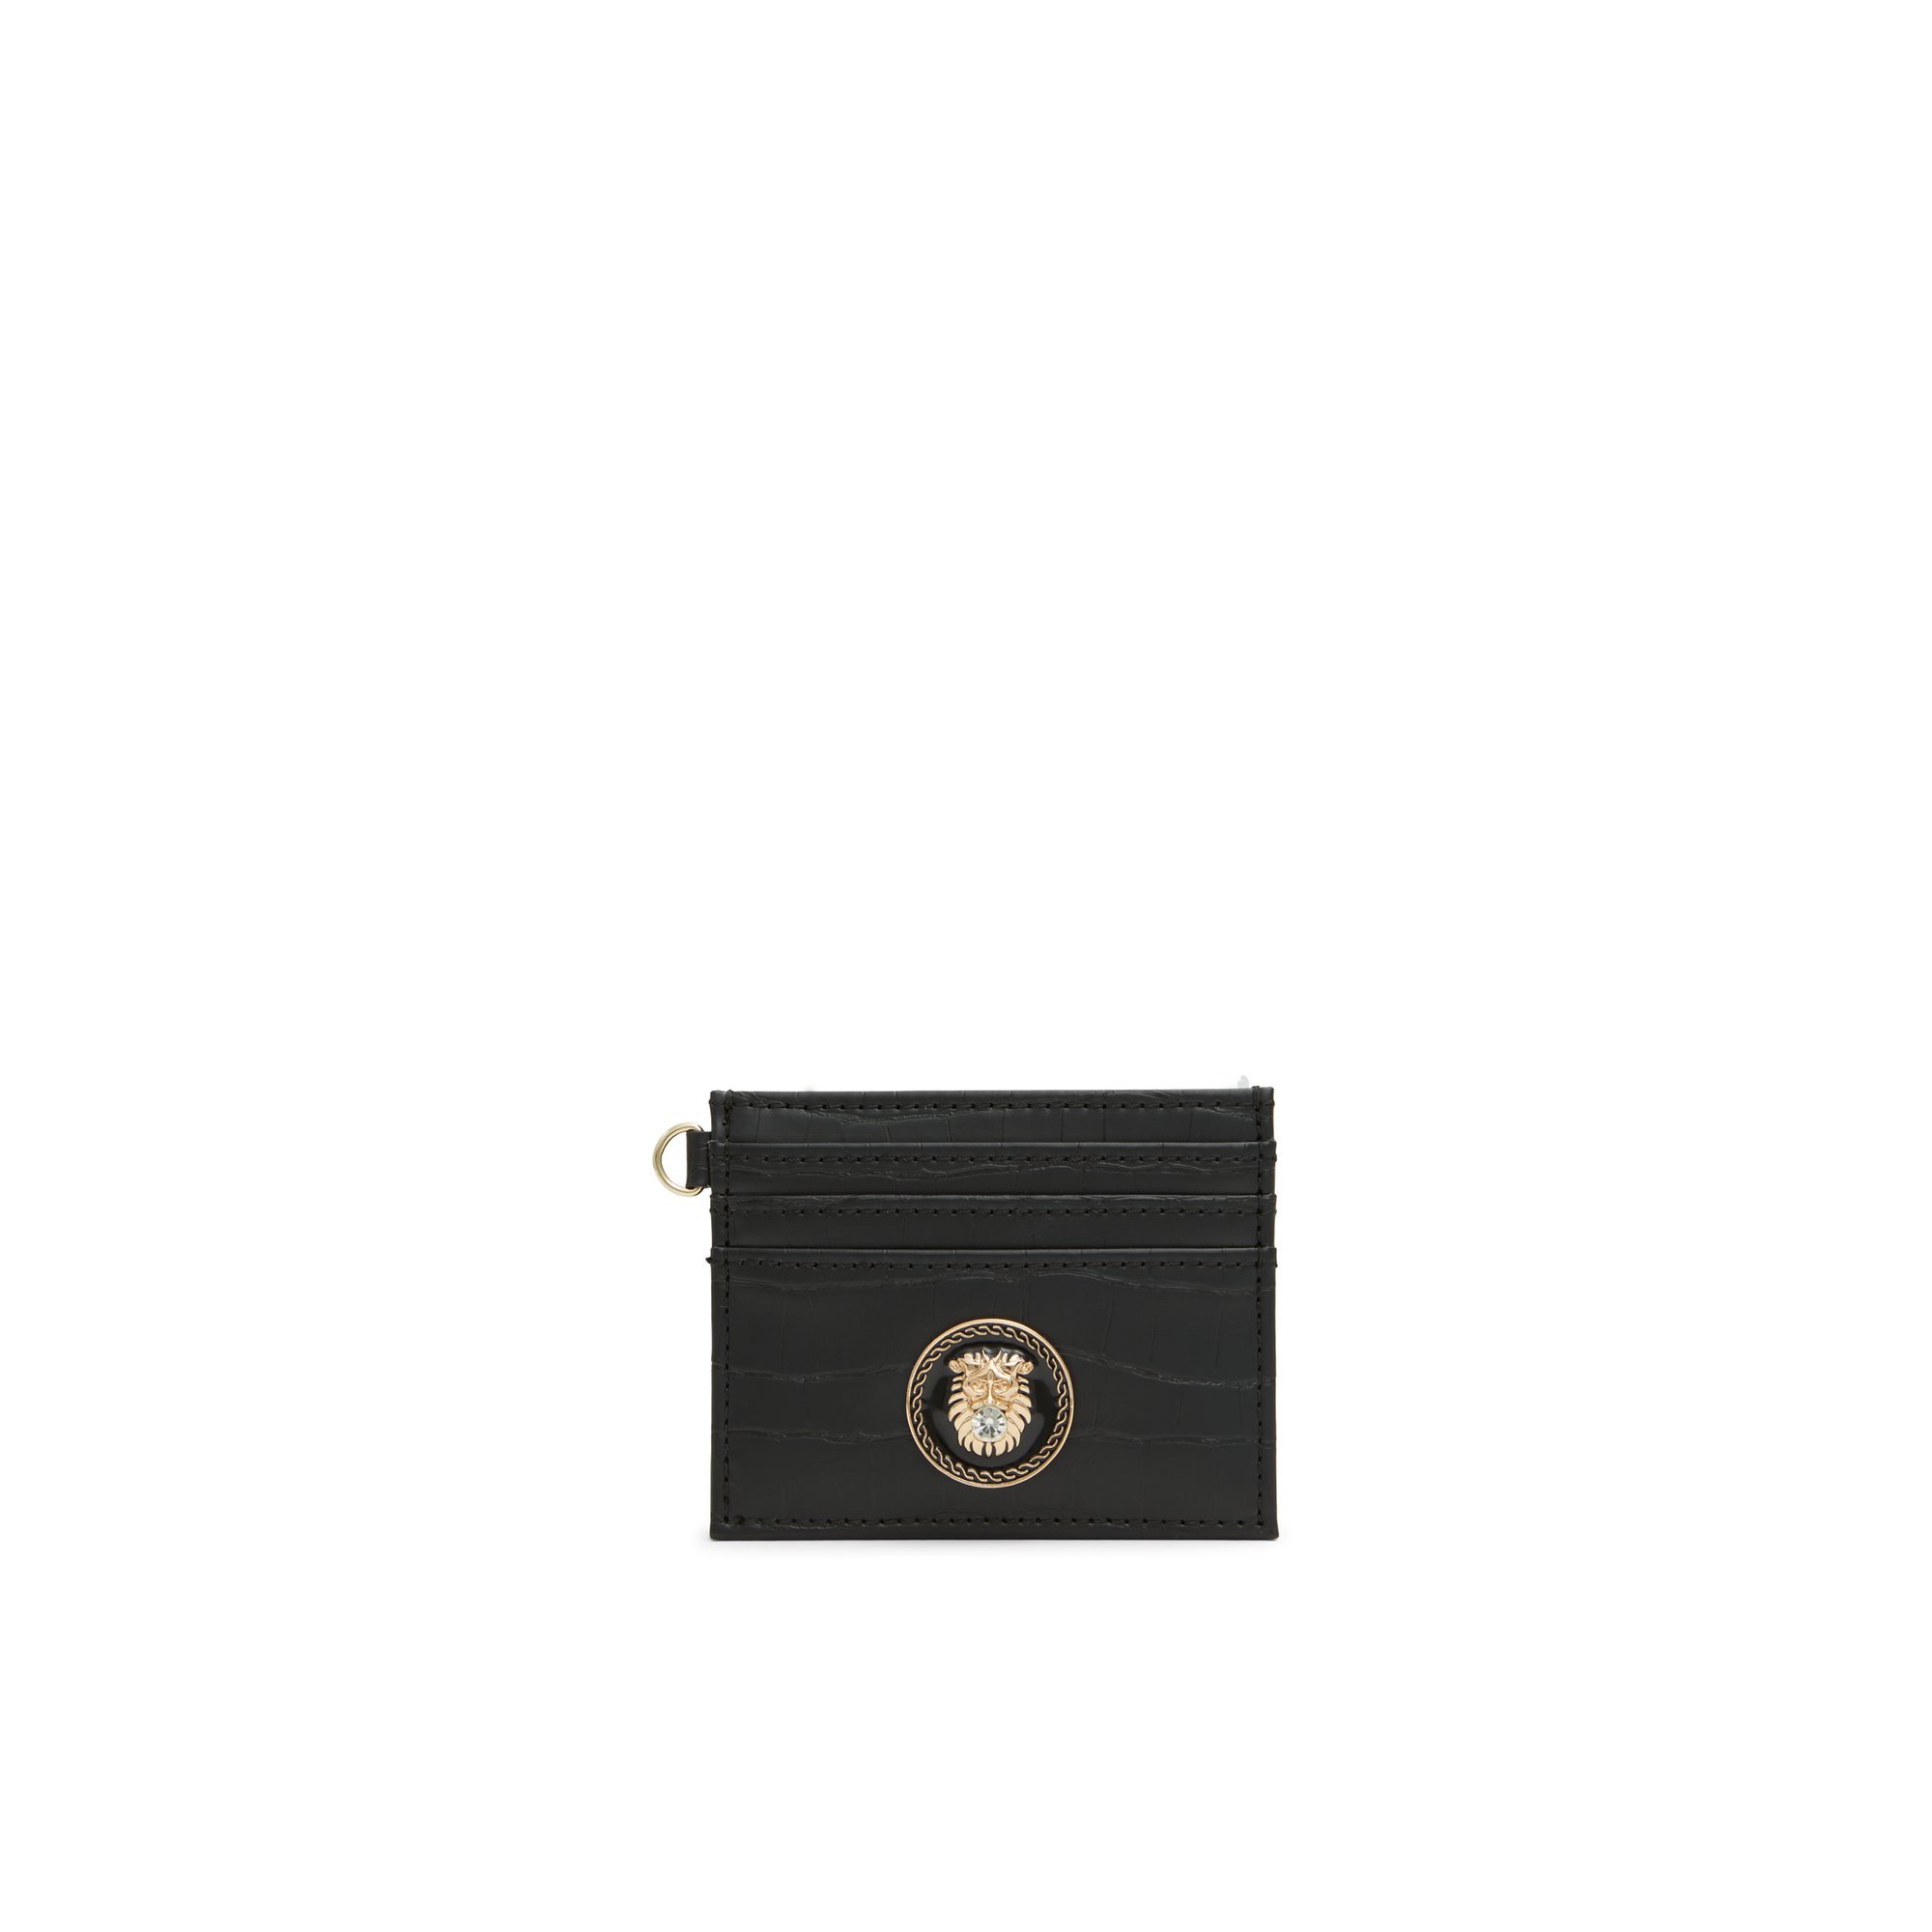 ALDO Wigollaie - Women's Wallet Handbag - Black-Gold